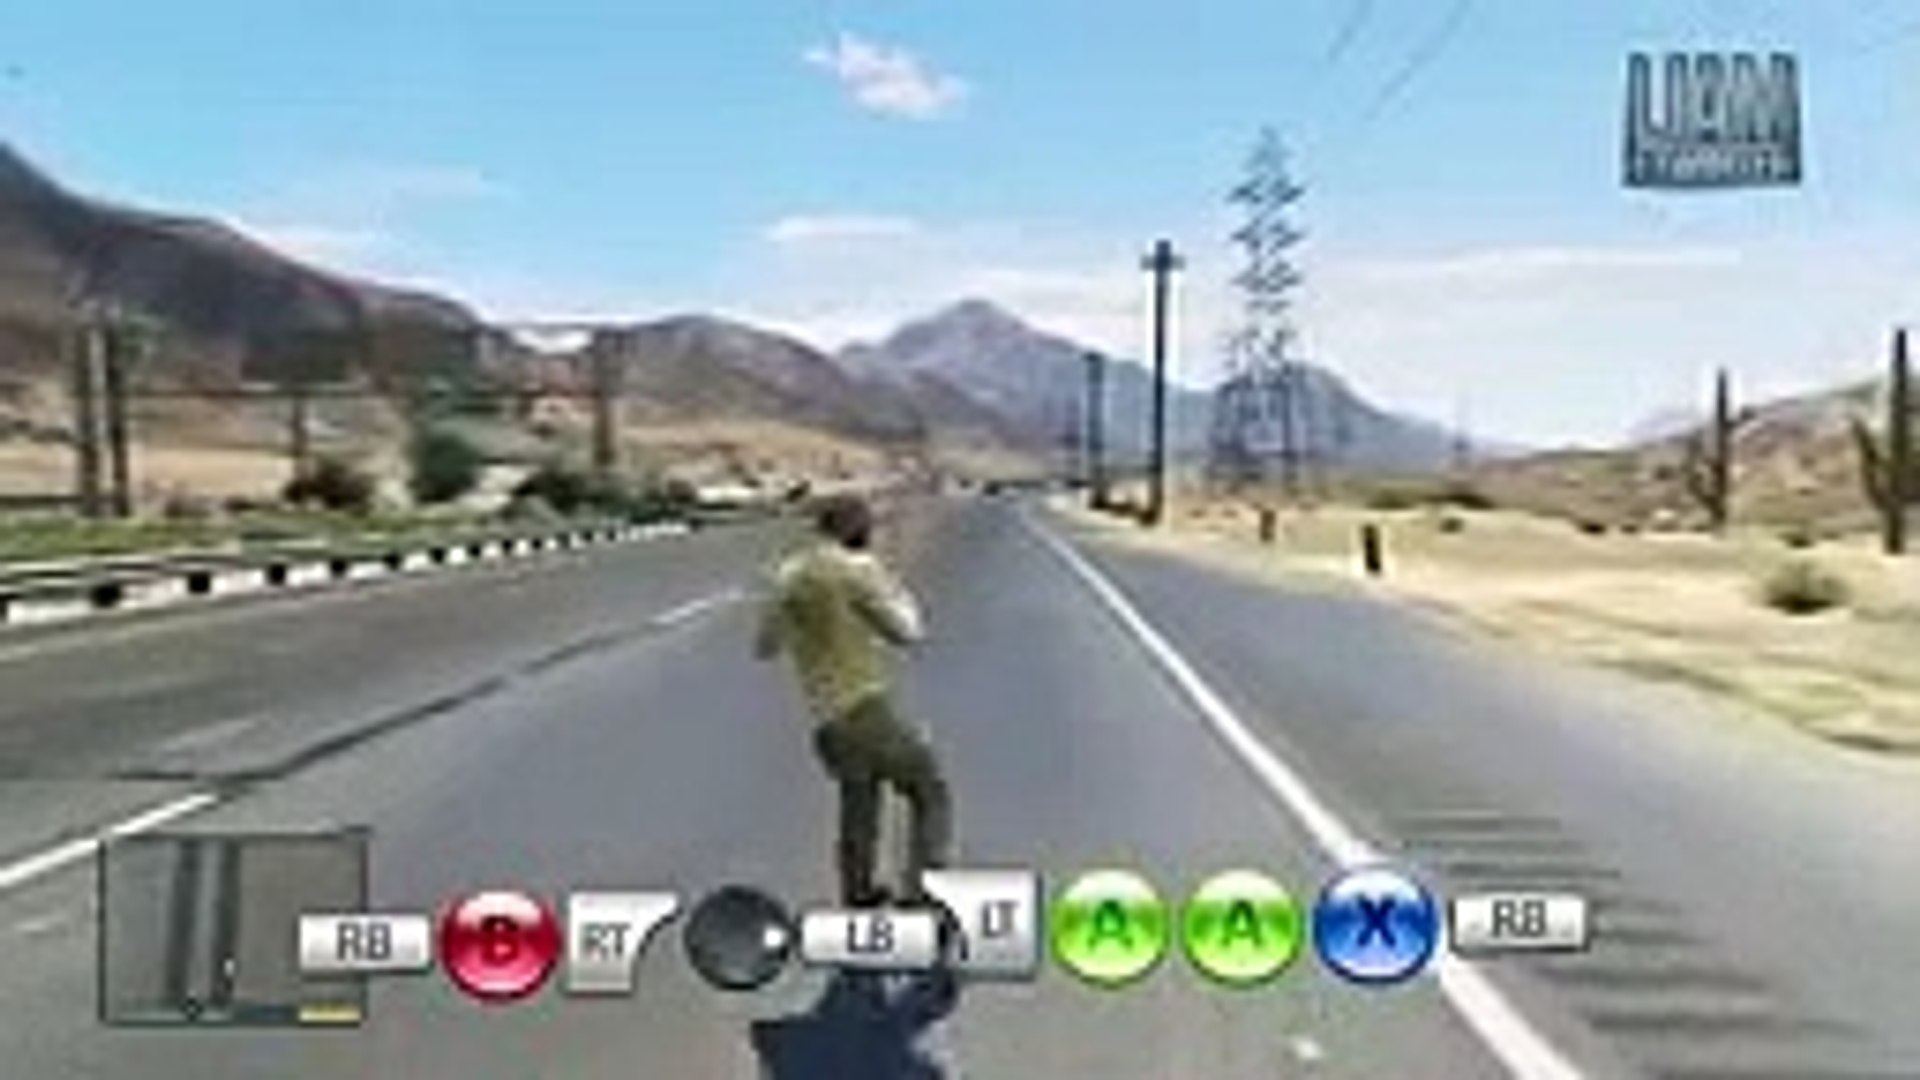 GTA 5 Super Jump Cheat Code Xbox 360 PS3 GTA V Gameplay - video Dailymotion